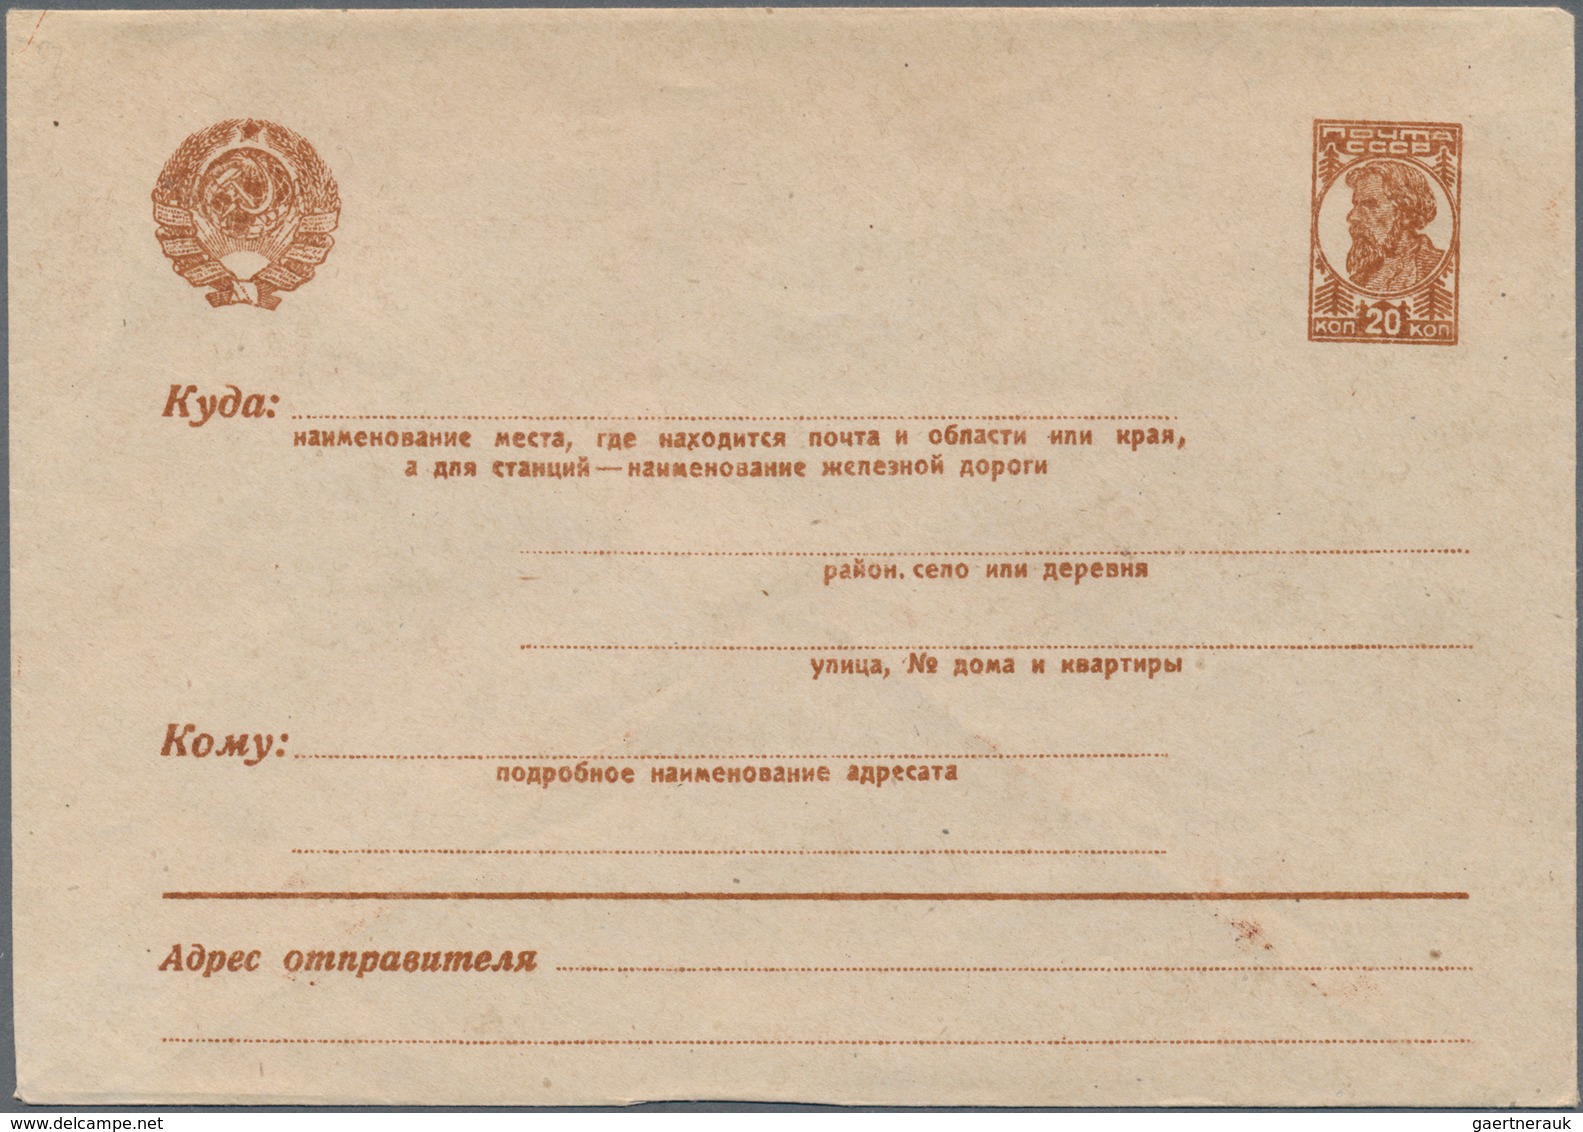 Sowjetunion - Ganzsachen: 1931/33, four unused picture postal stationery envelopes with advertisemen